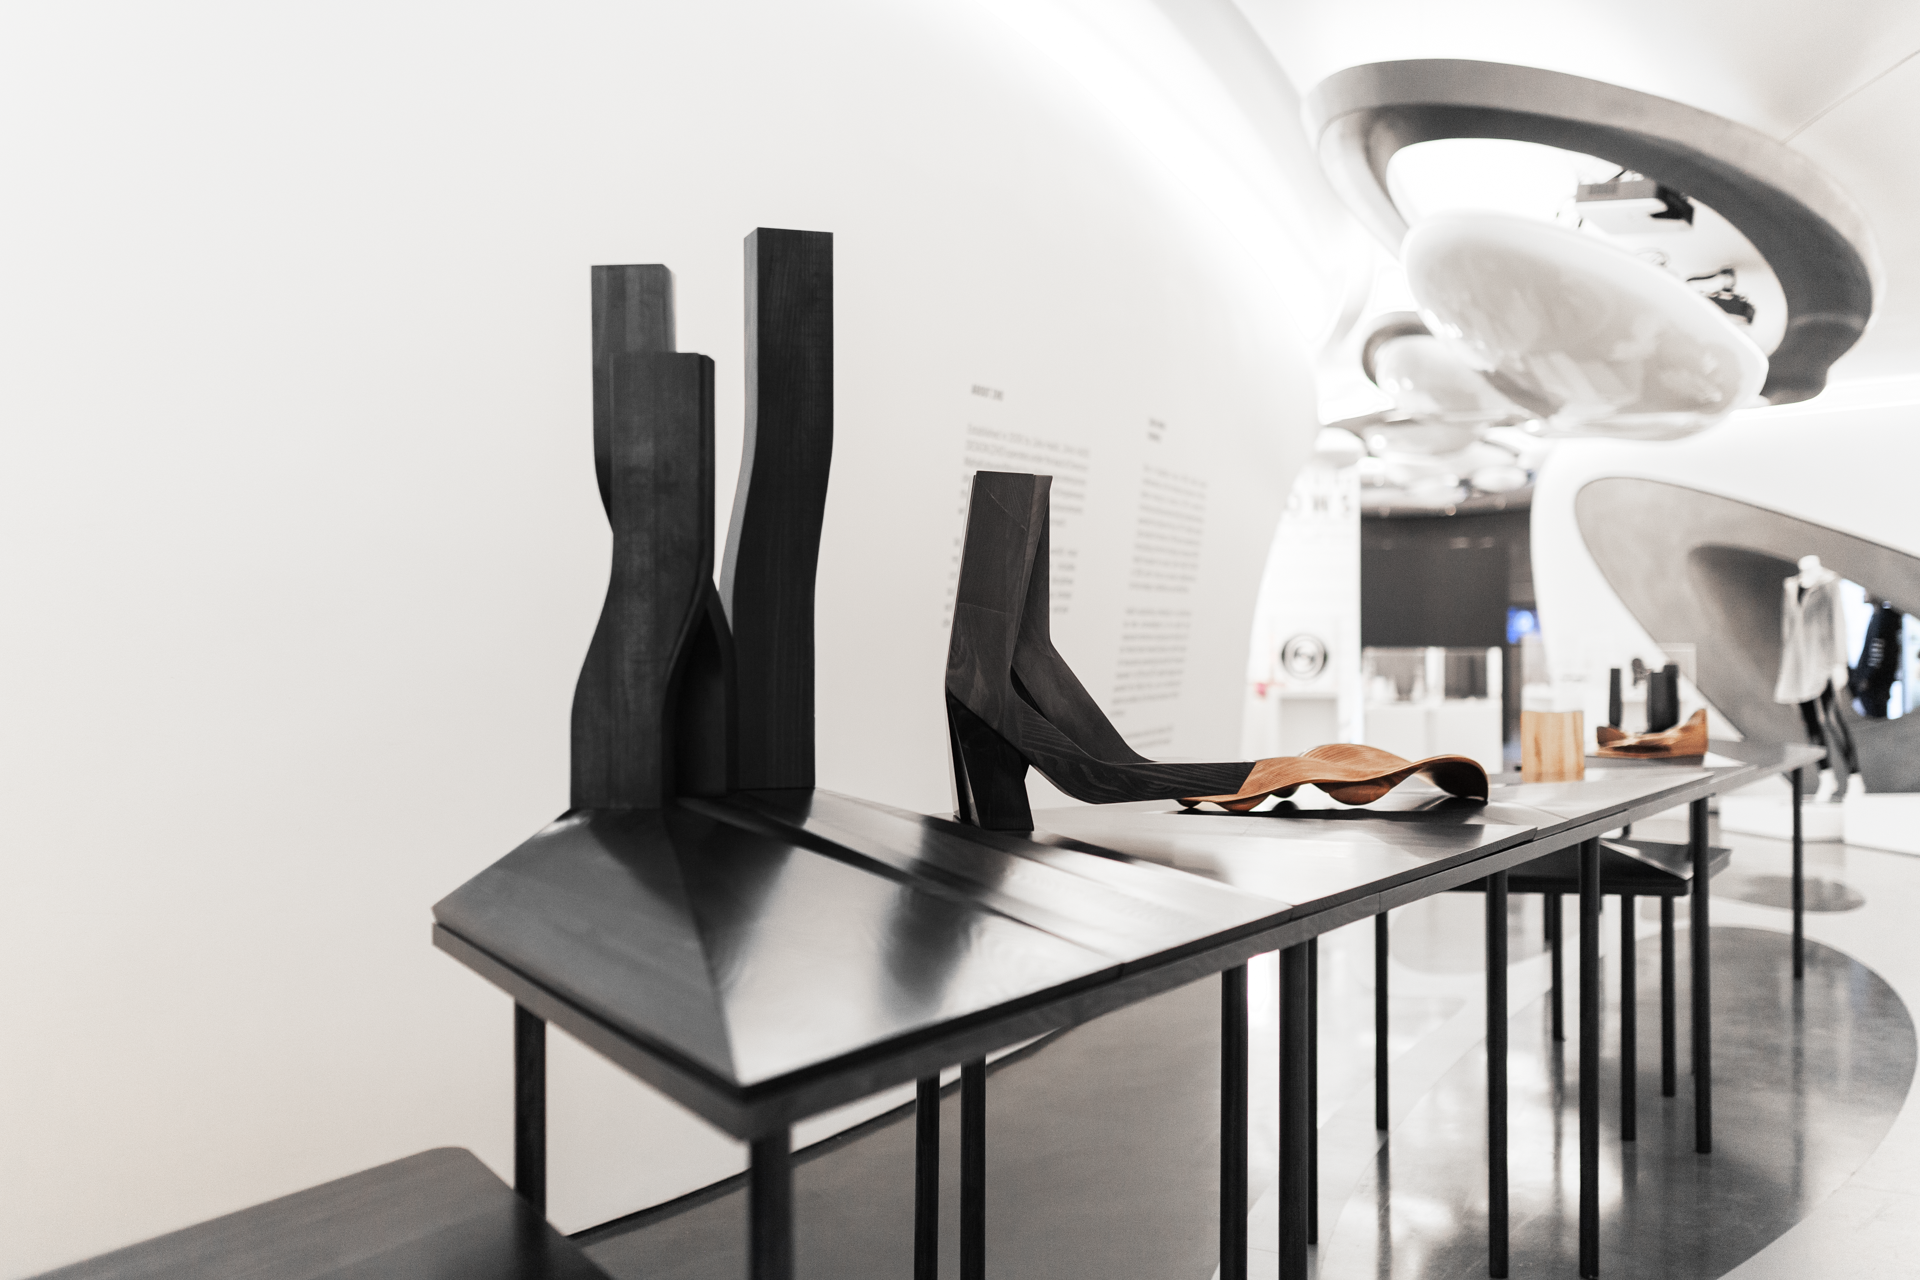 Everything Flows: Zaha Hadid Design at Roca London Gallery